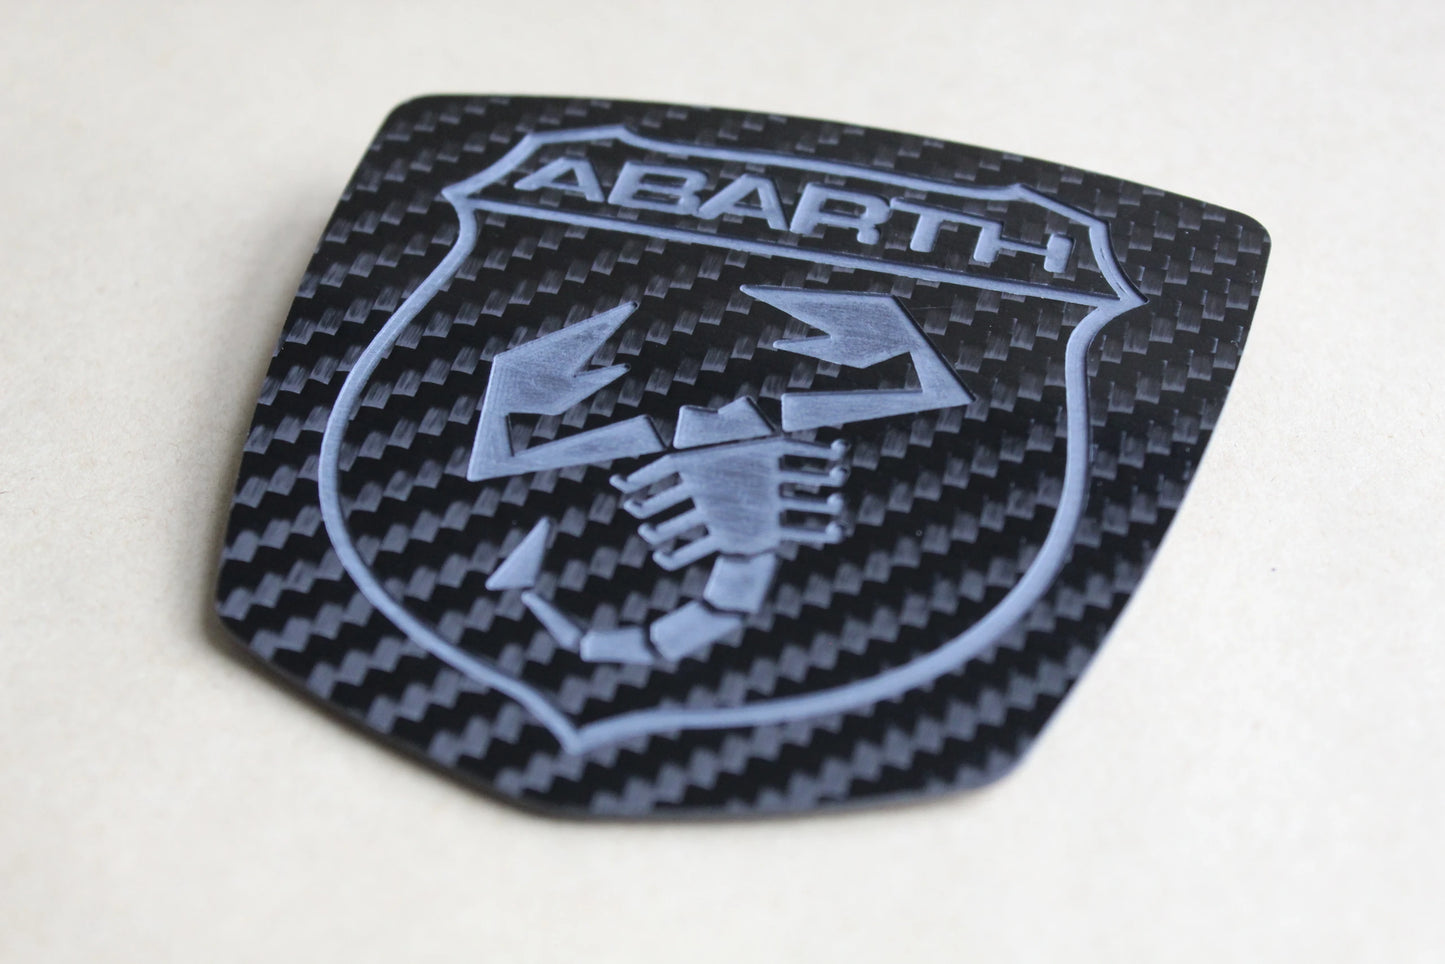 Abarth 500 REAR Emblem / Abarth 124 Emblem - Real Carbon